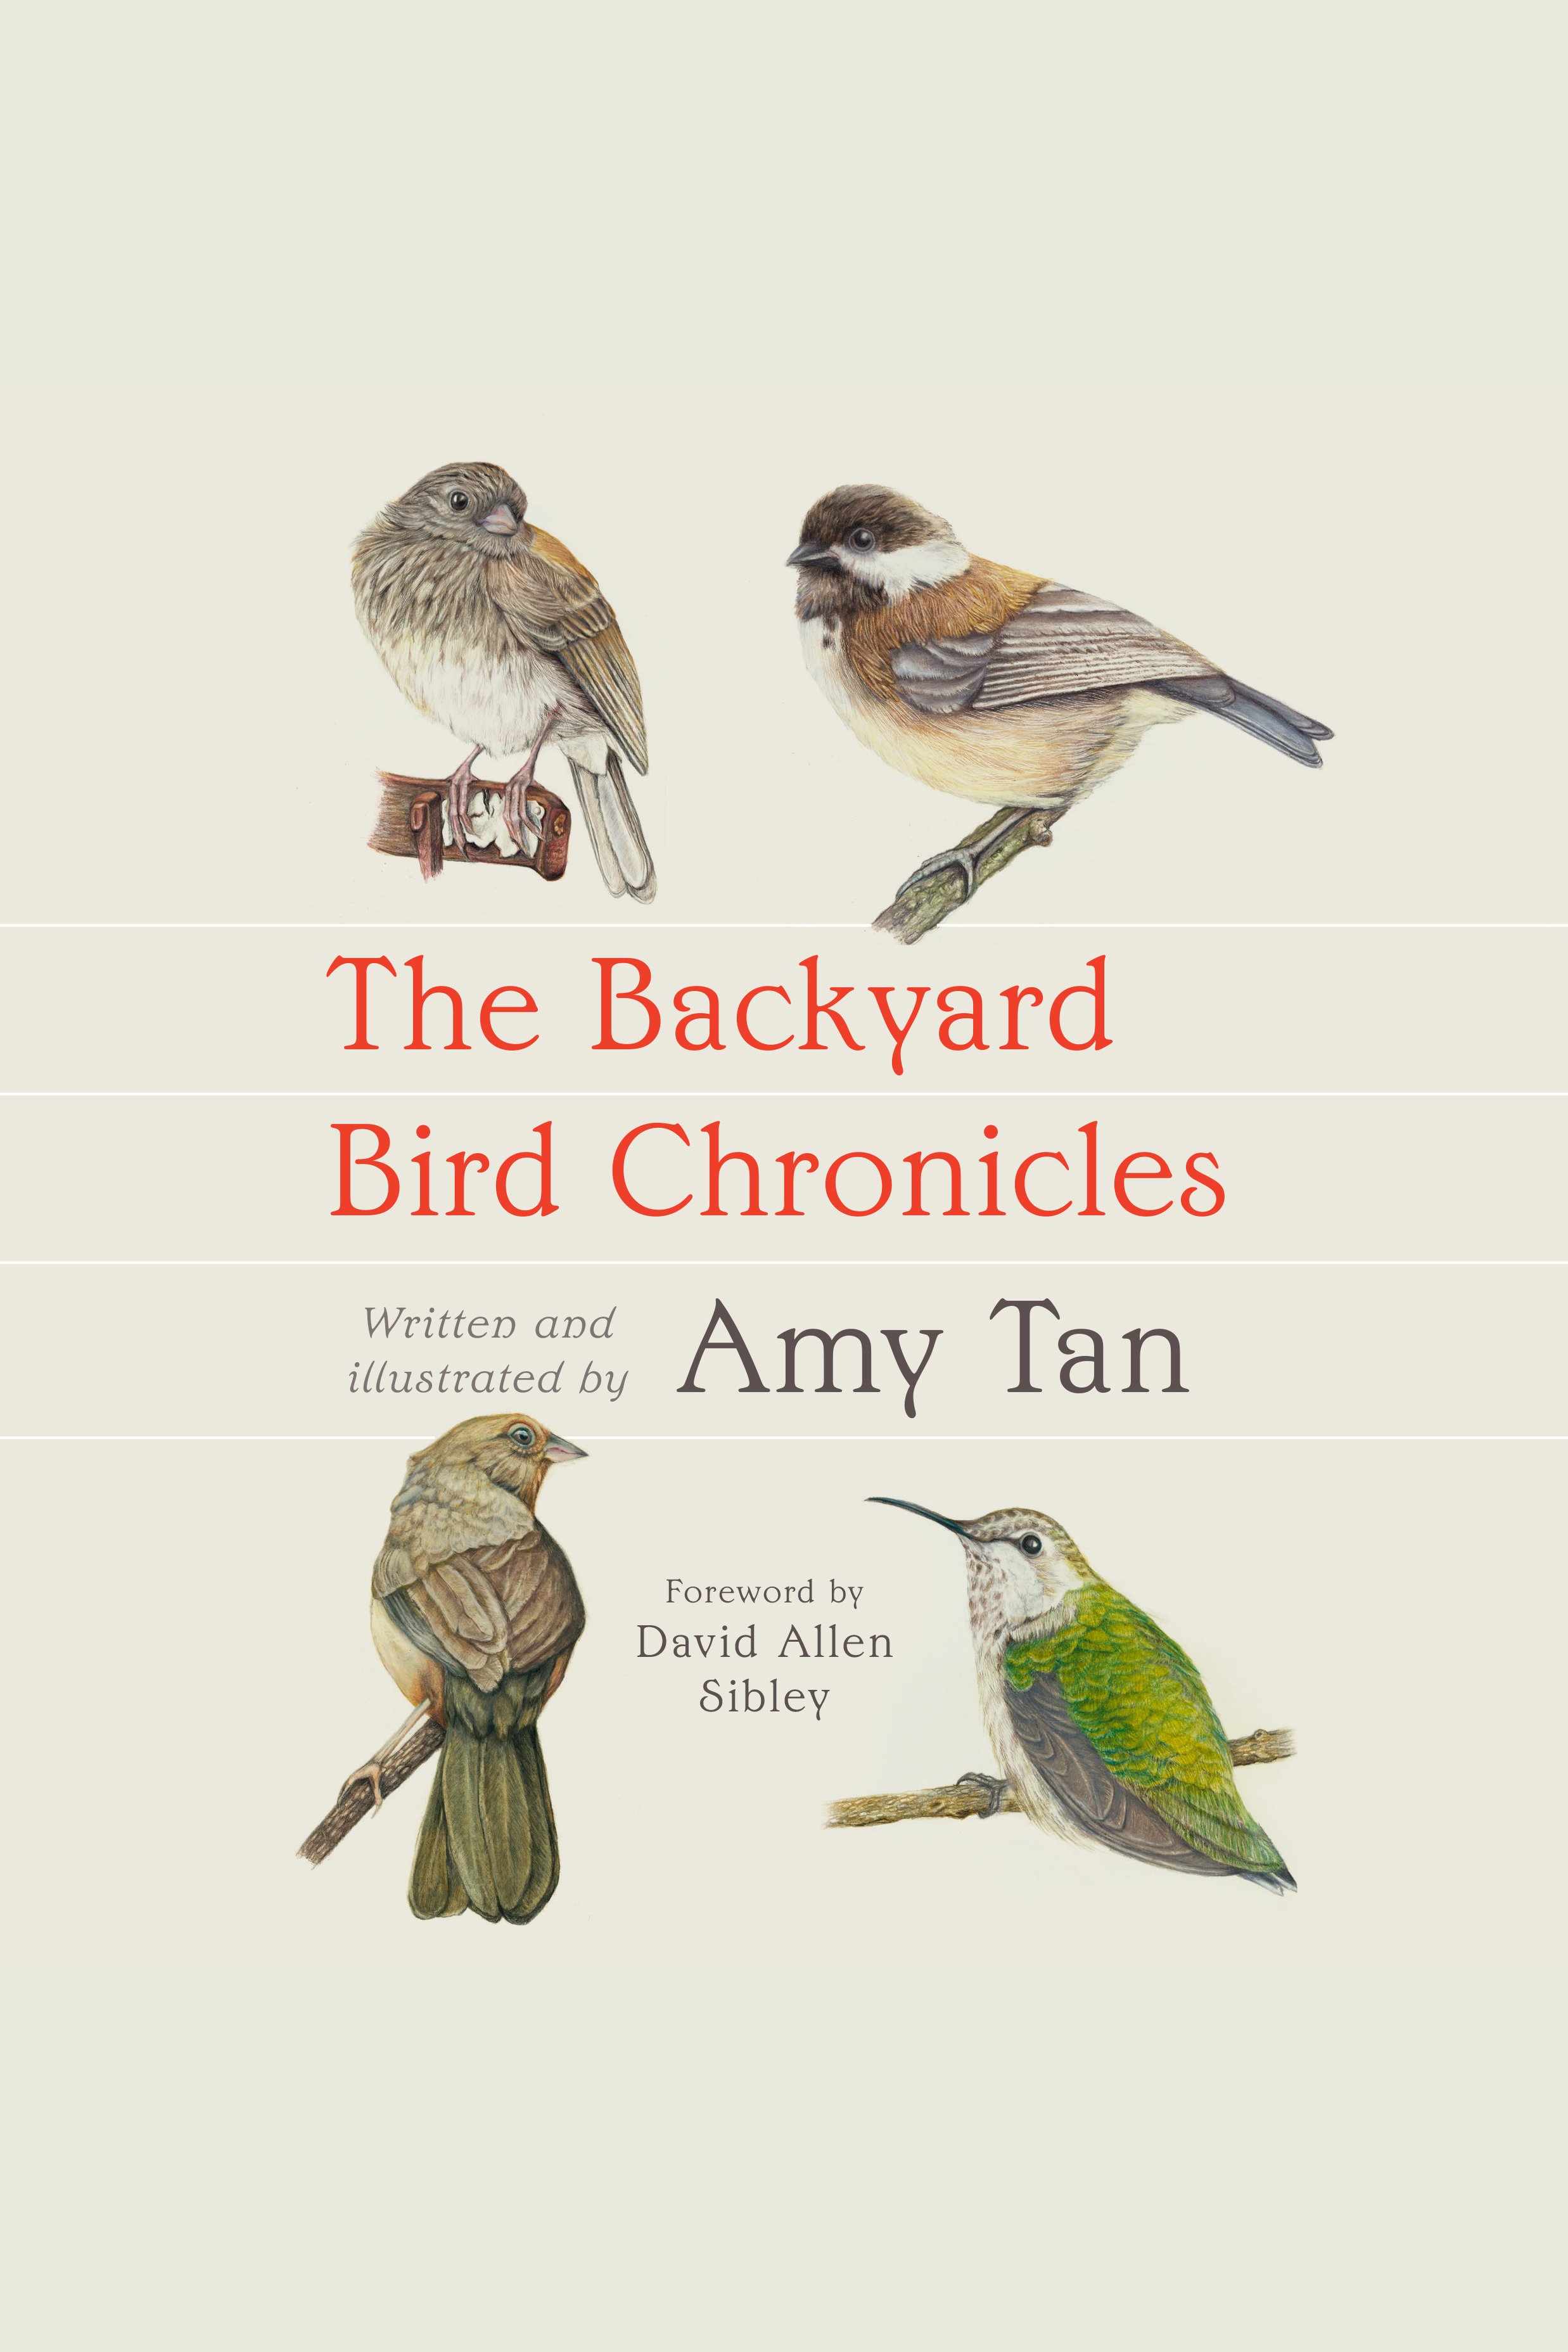 The Backyard Bird Chronicles cover image